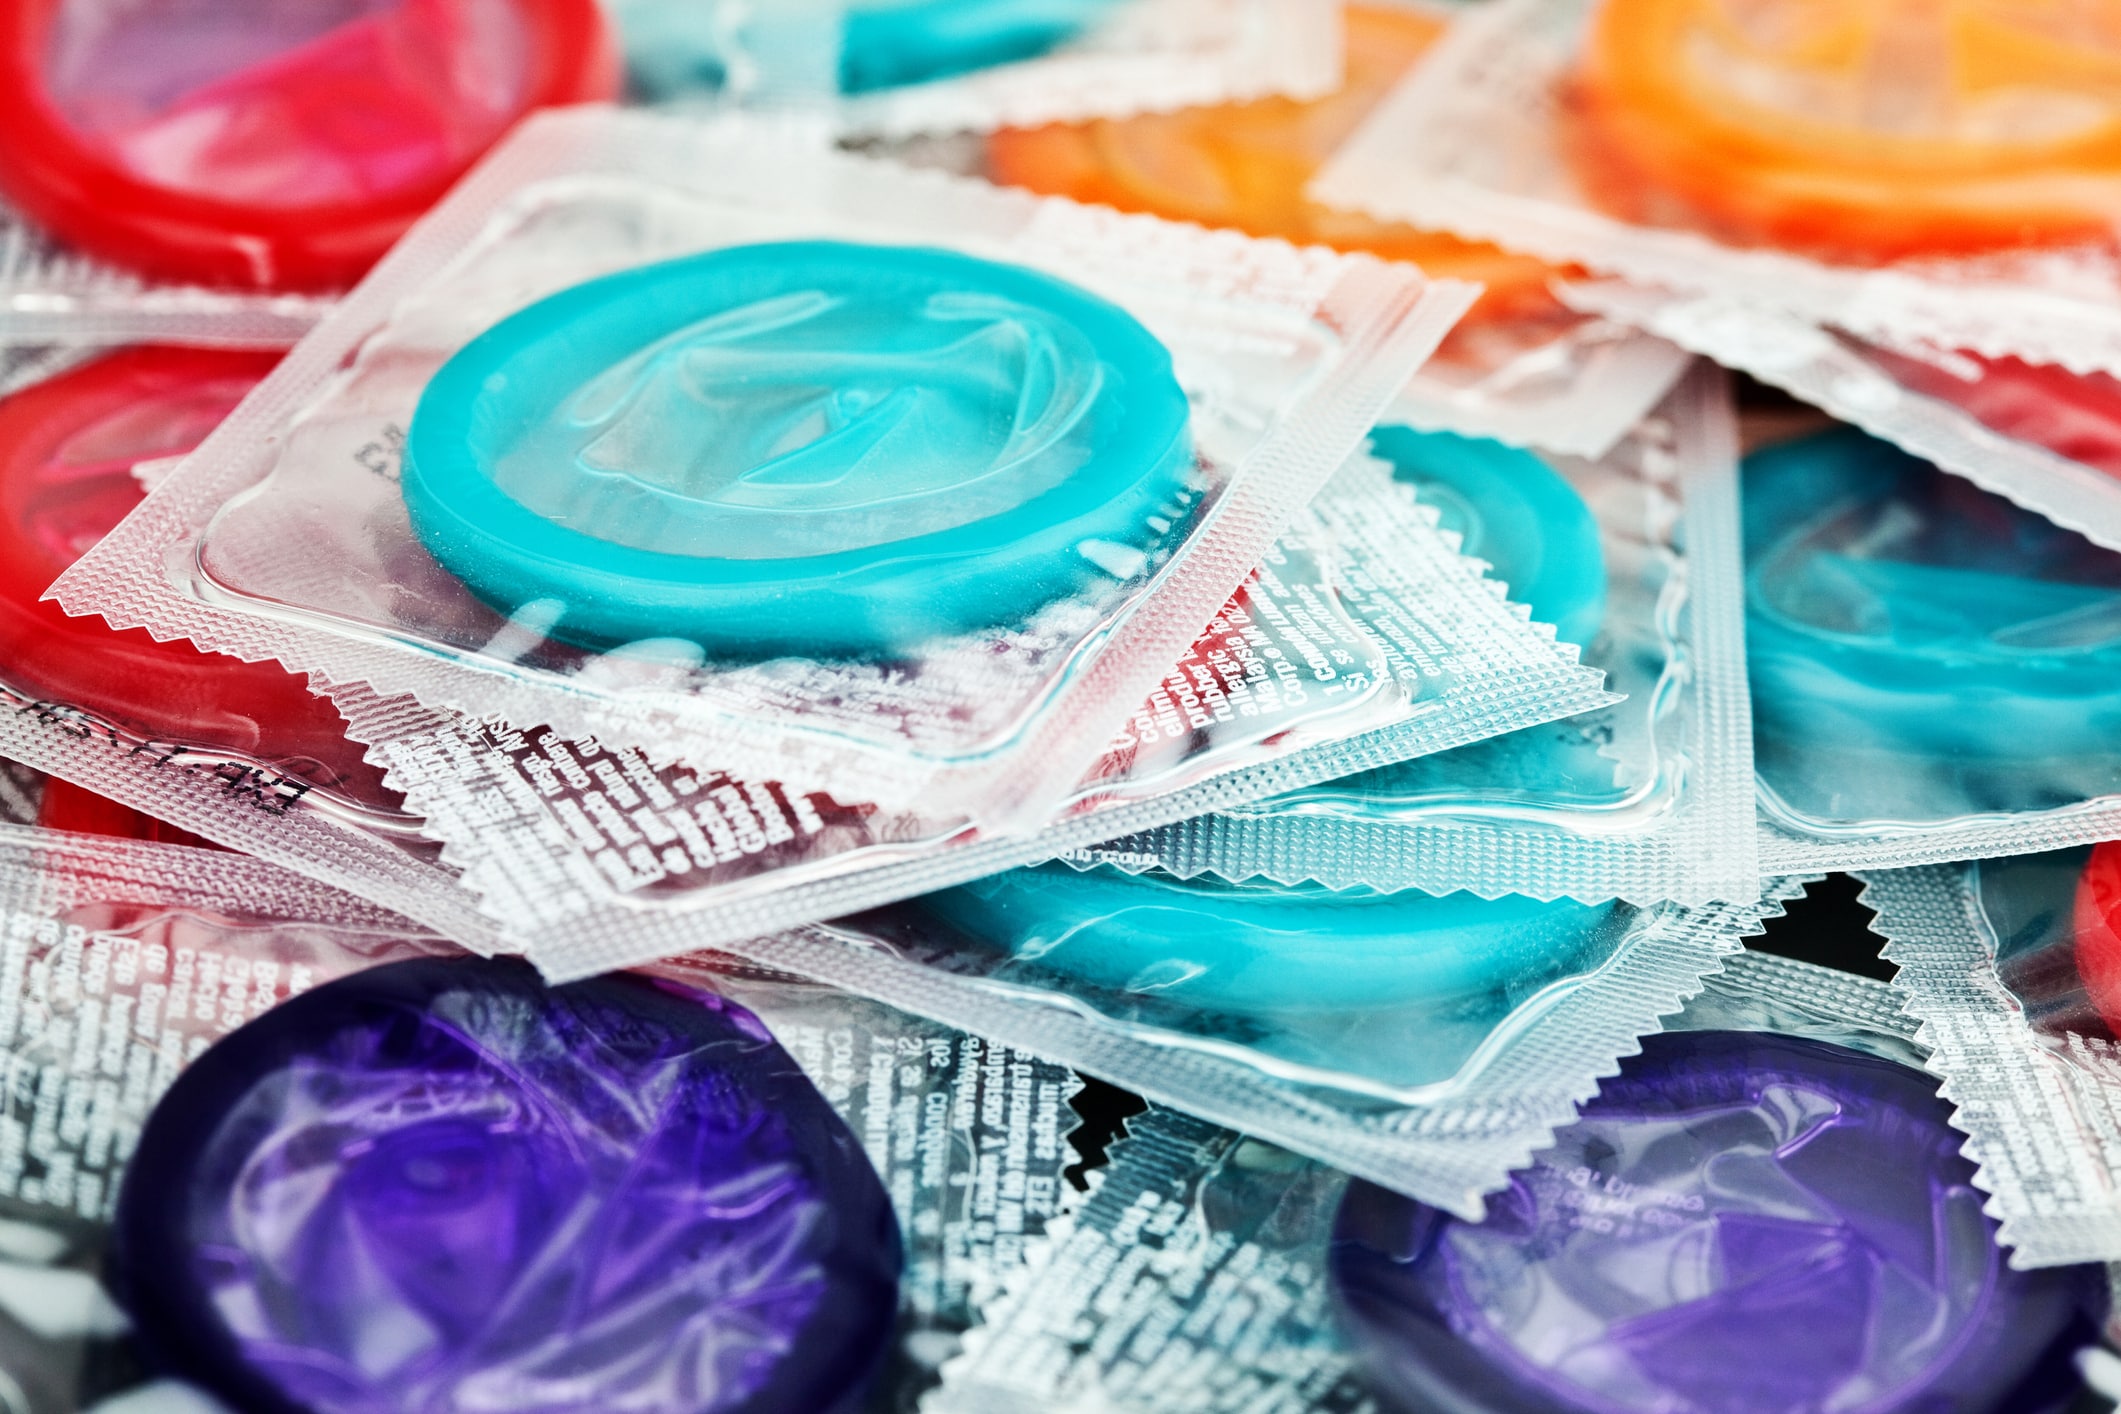 Pile of Rubbers aka Condoms